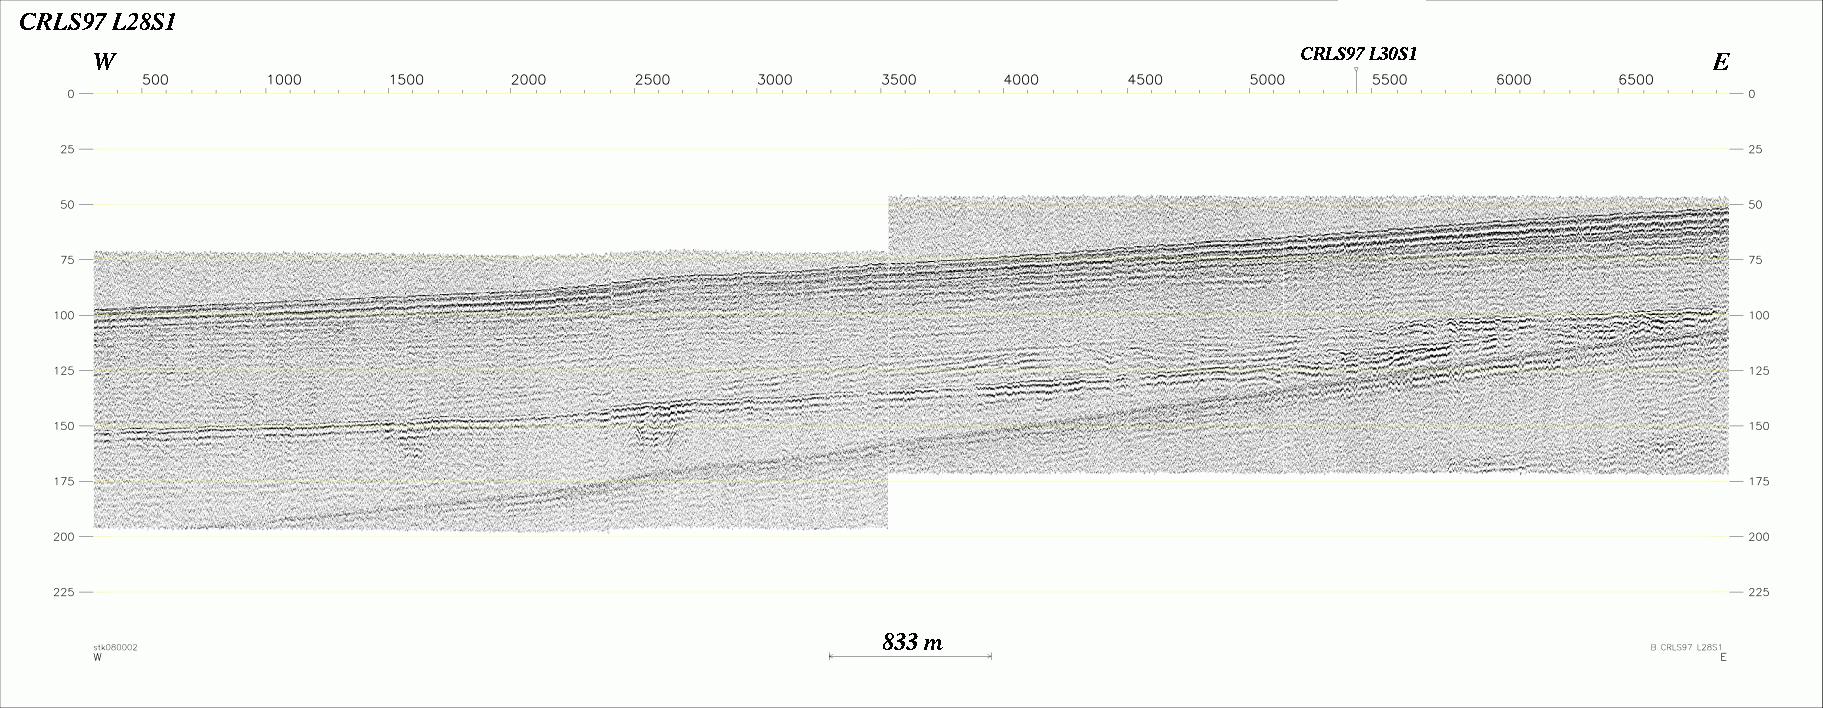 Seismic Reflection Profile Line No.: L28s1 (229334 bytes)